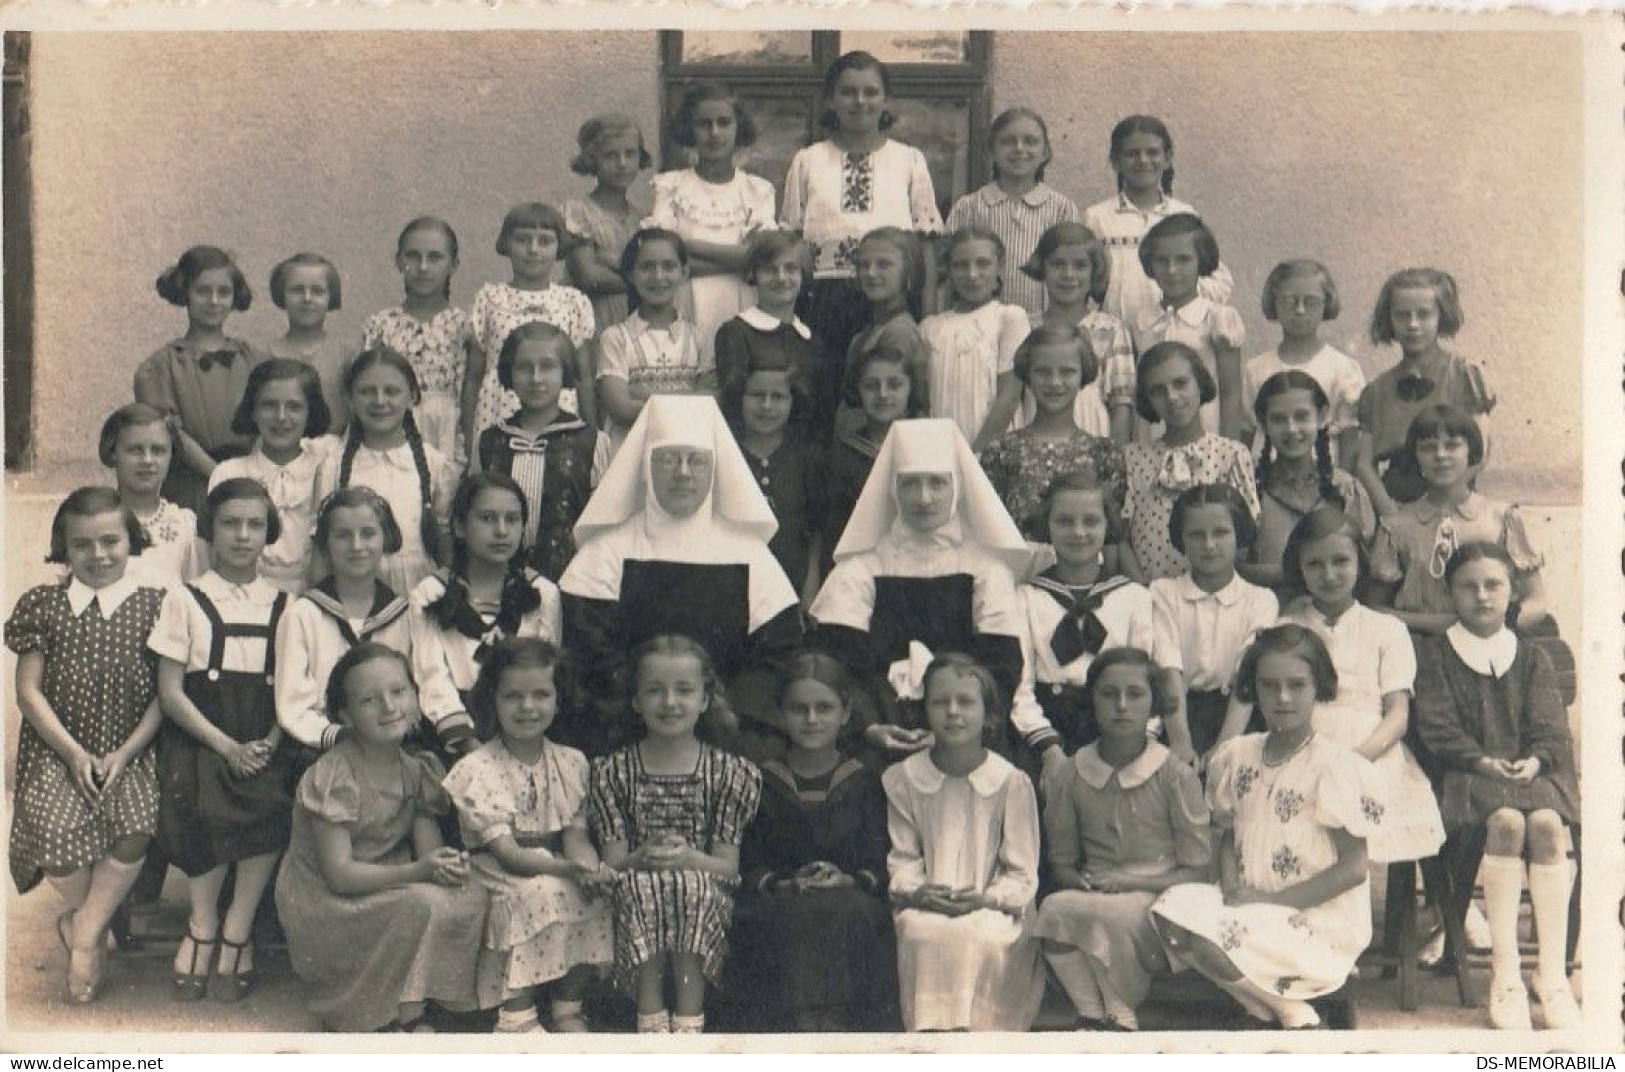 Catholic Nun & Group Of School Girls Old Photo Postcard 1920s - Taferelen En Landschappen